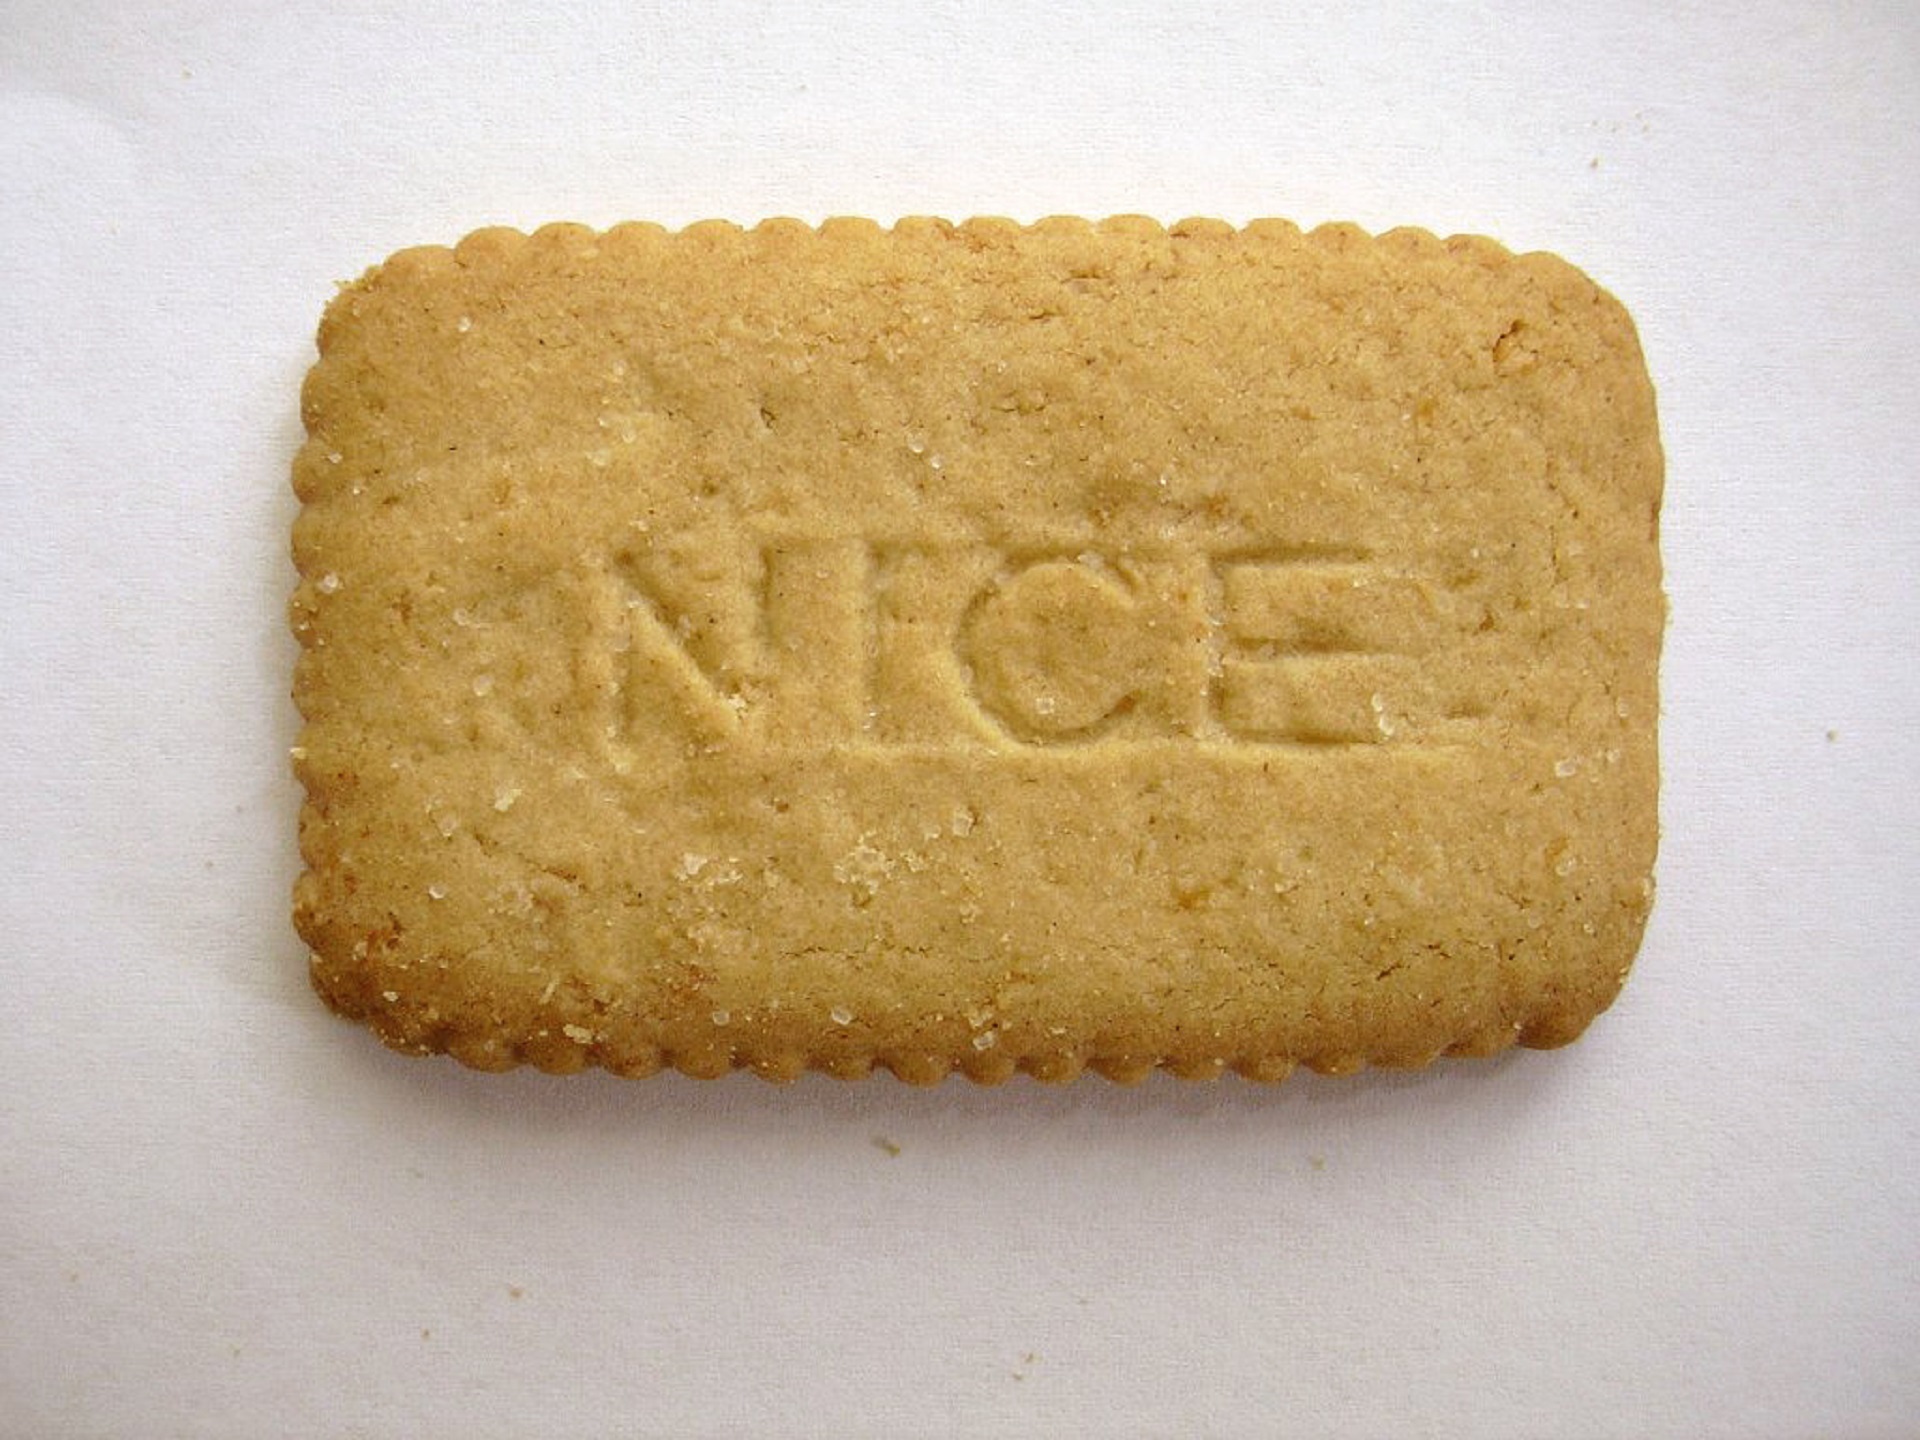 Nice biscuit photo